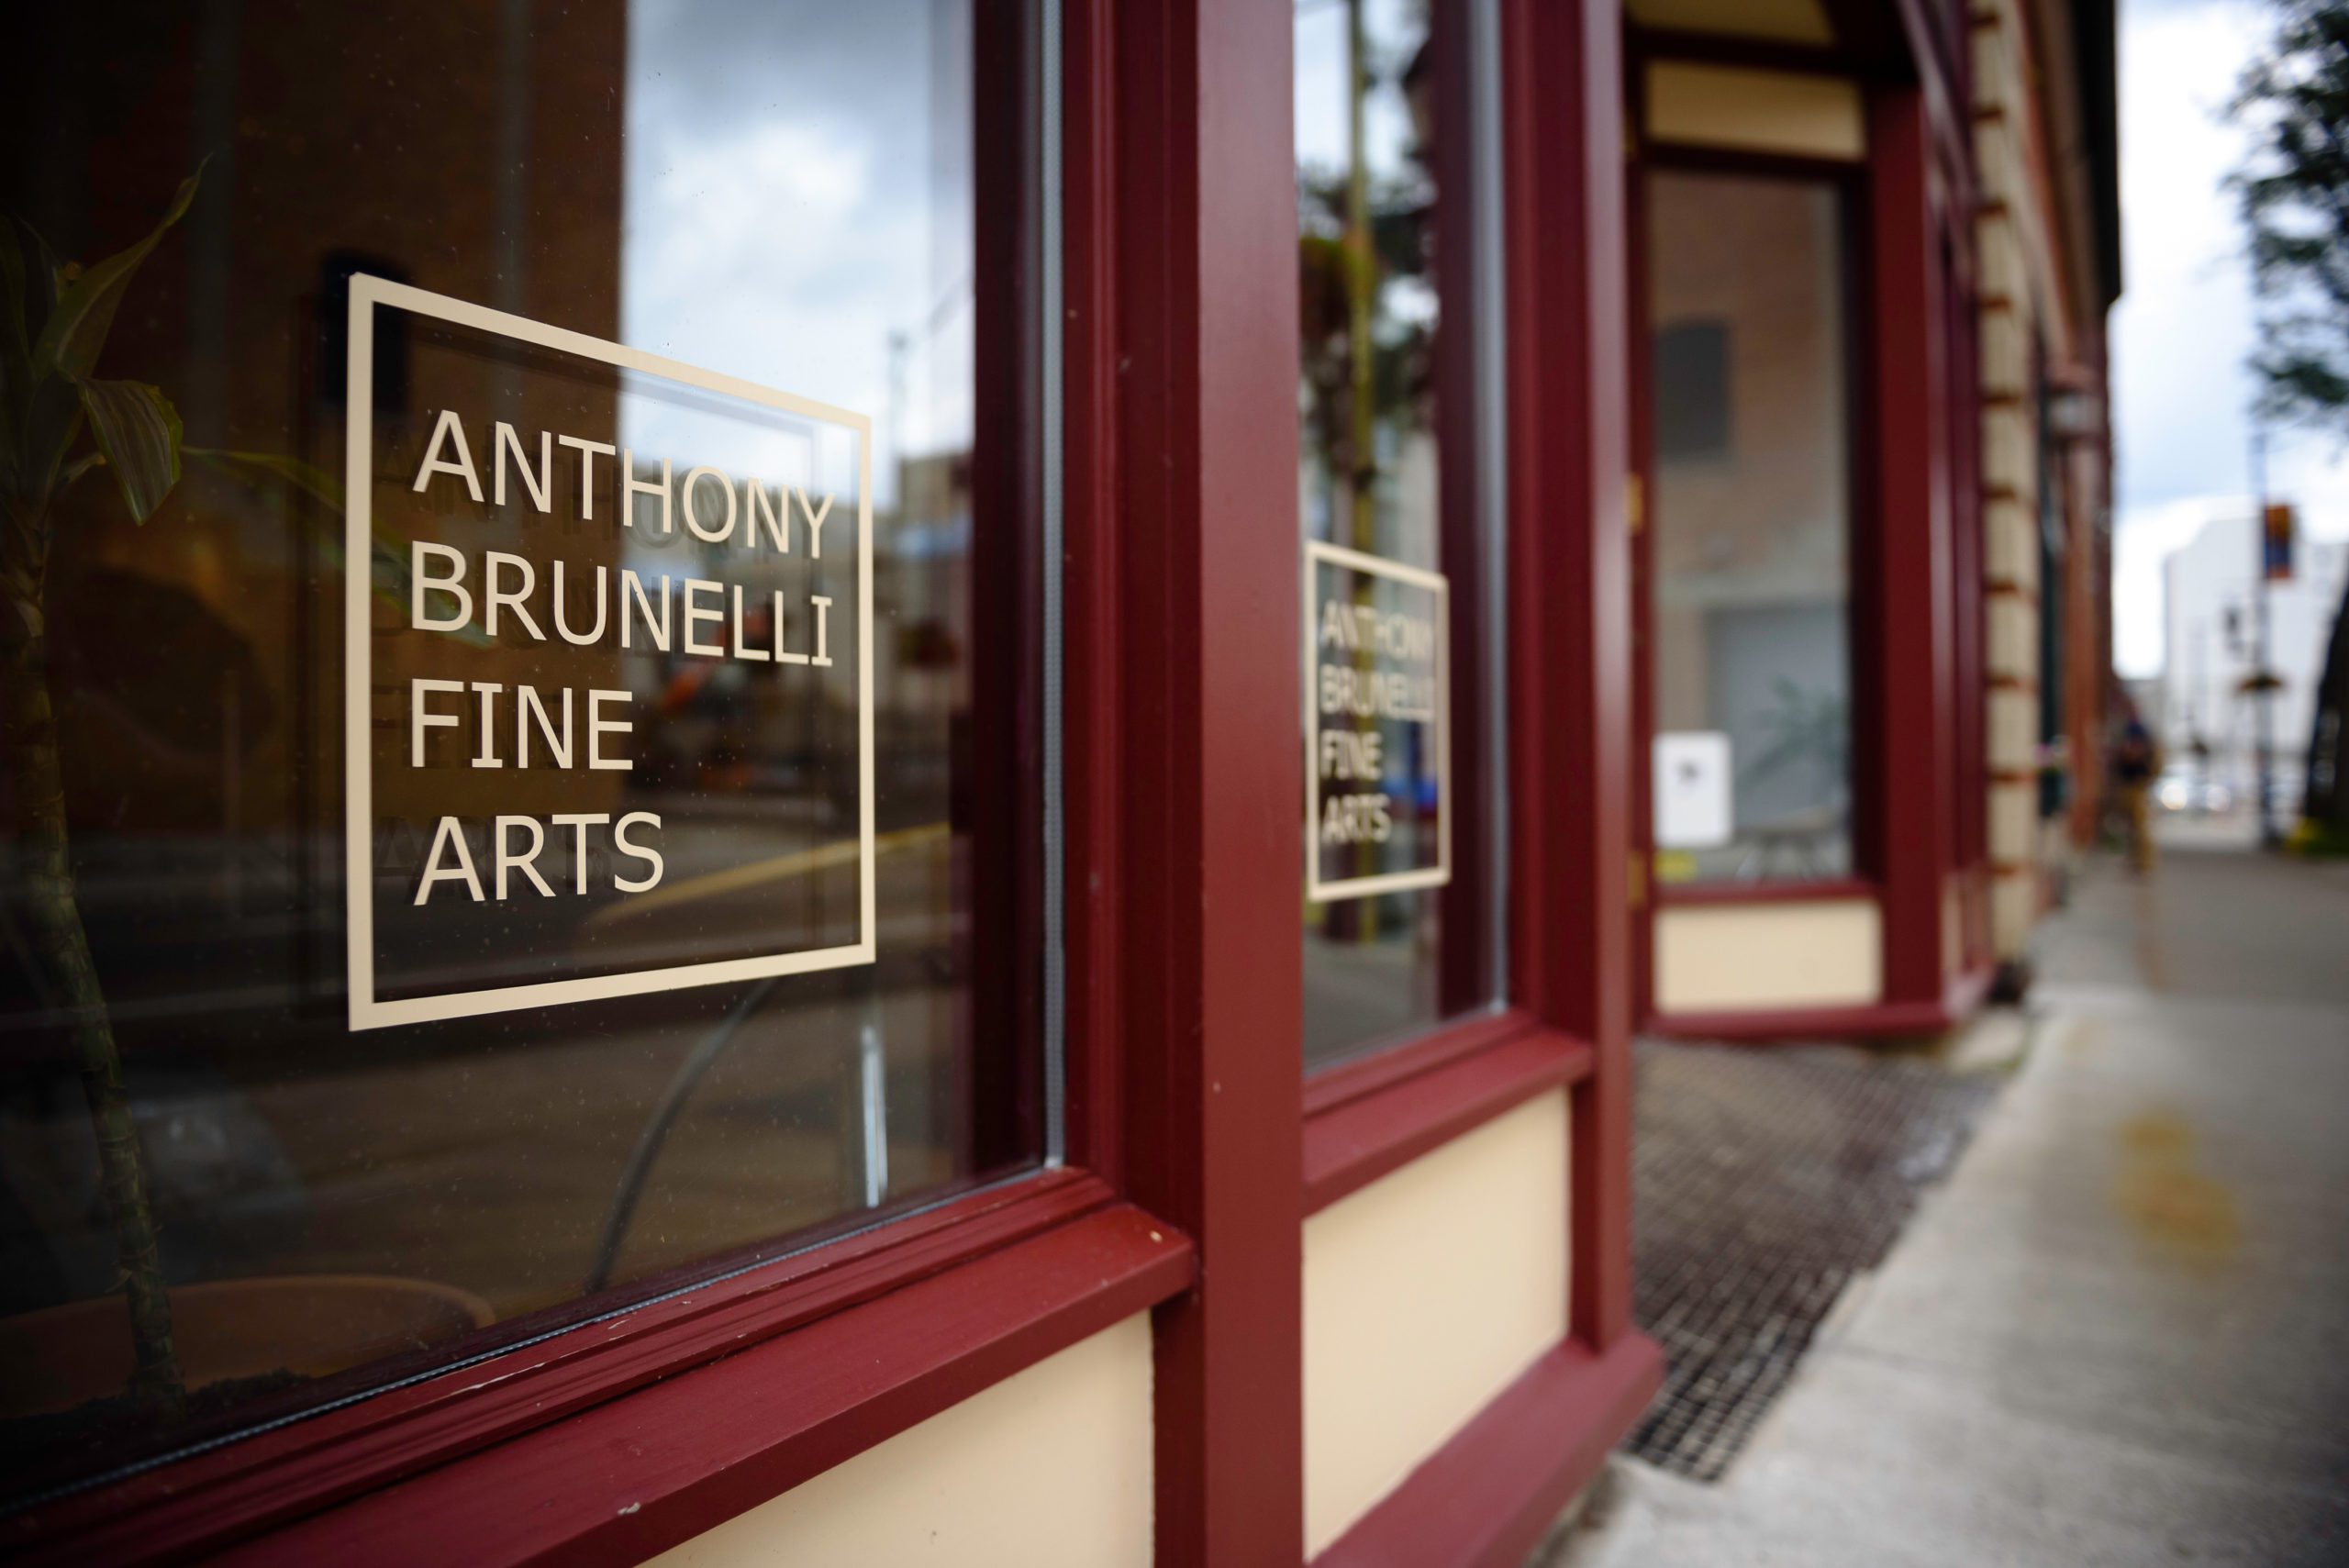 Anthony Brunelli Fine Arts